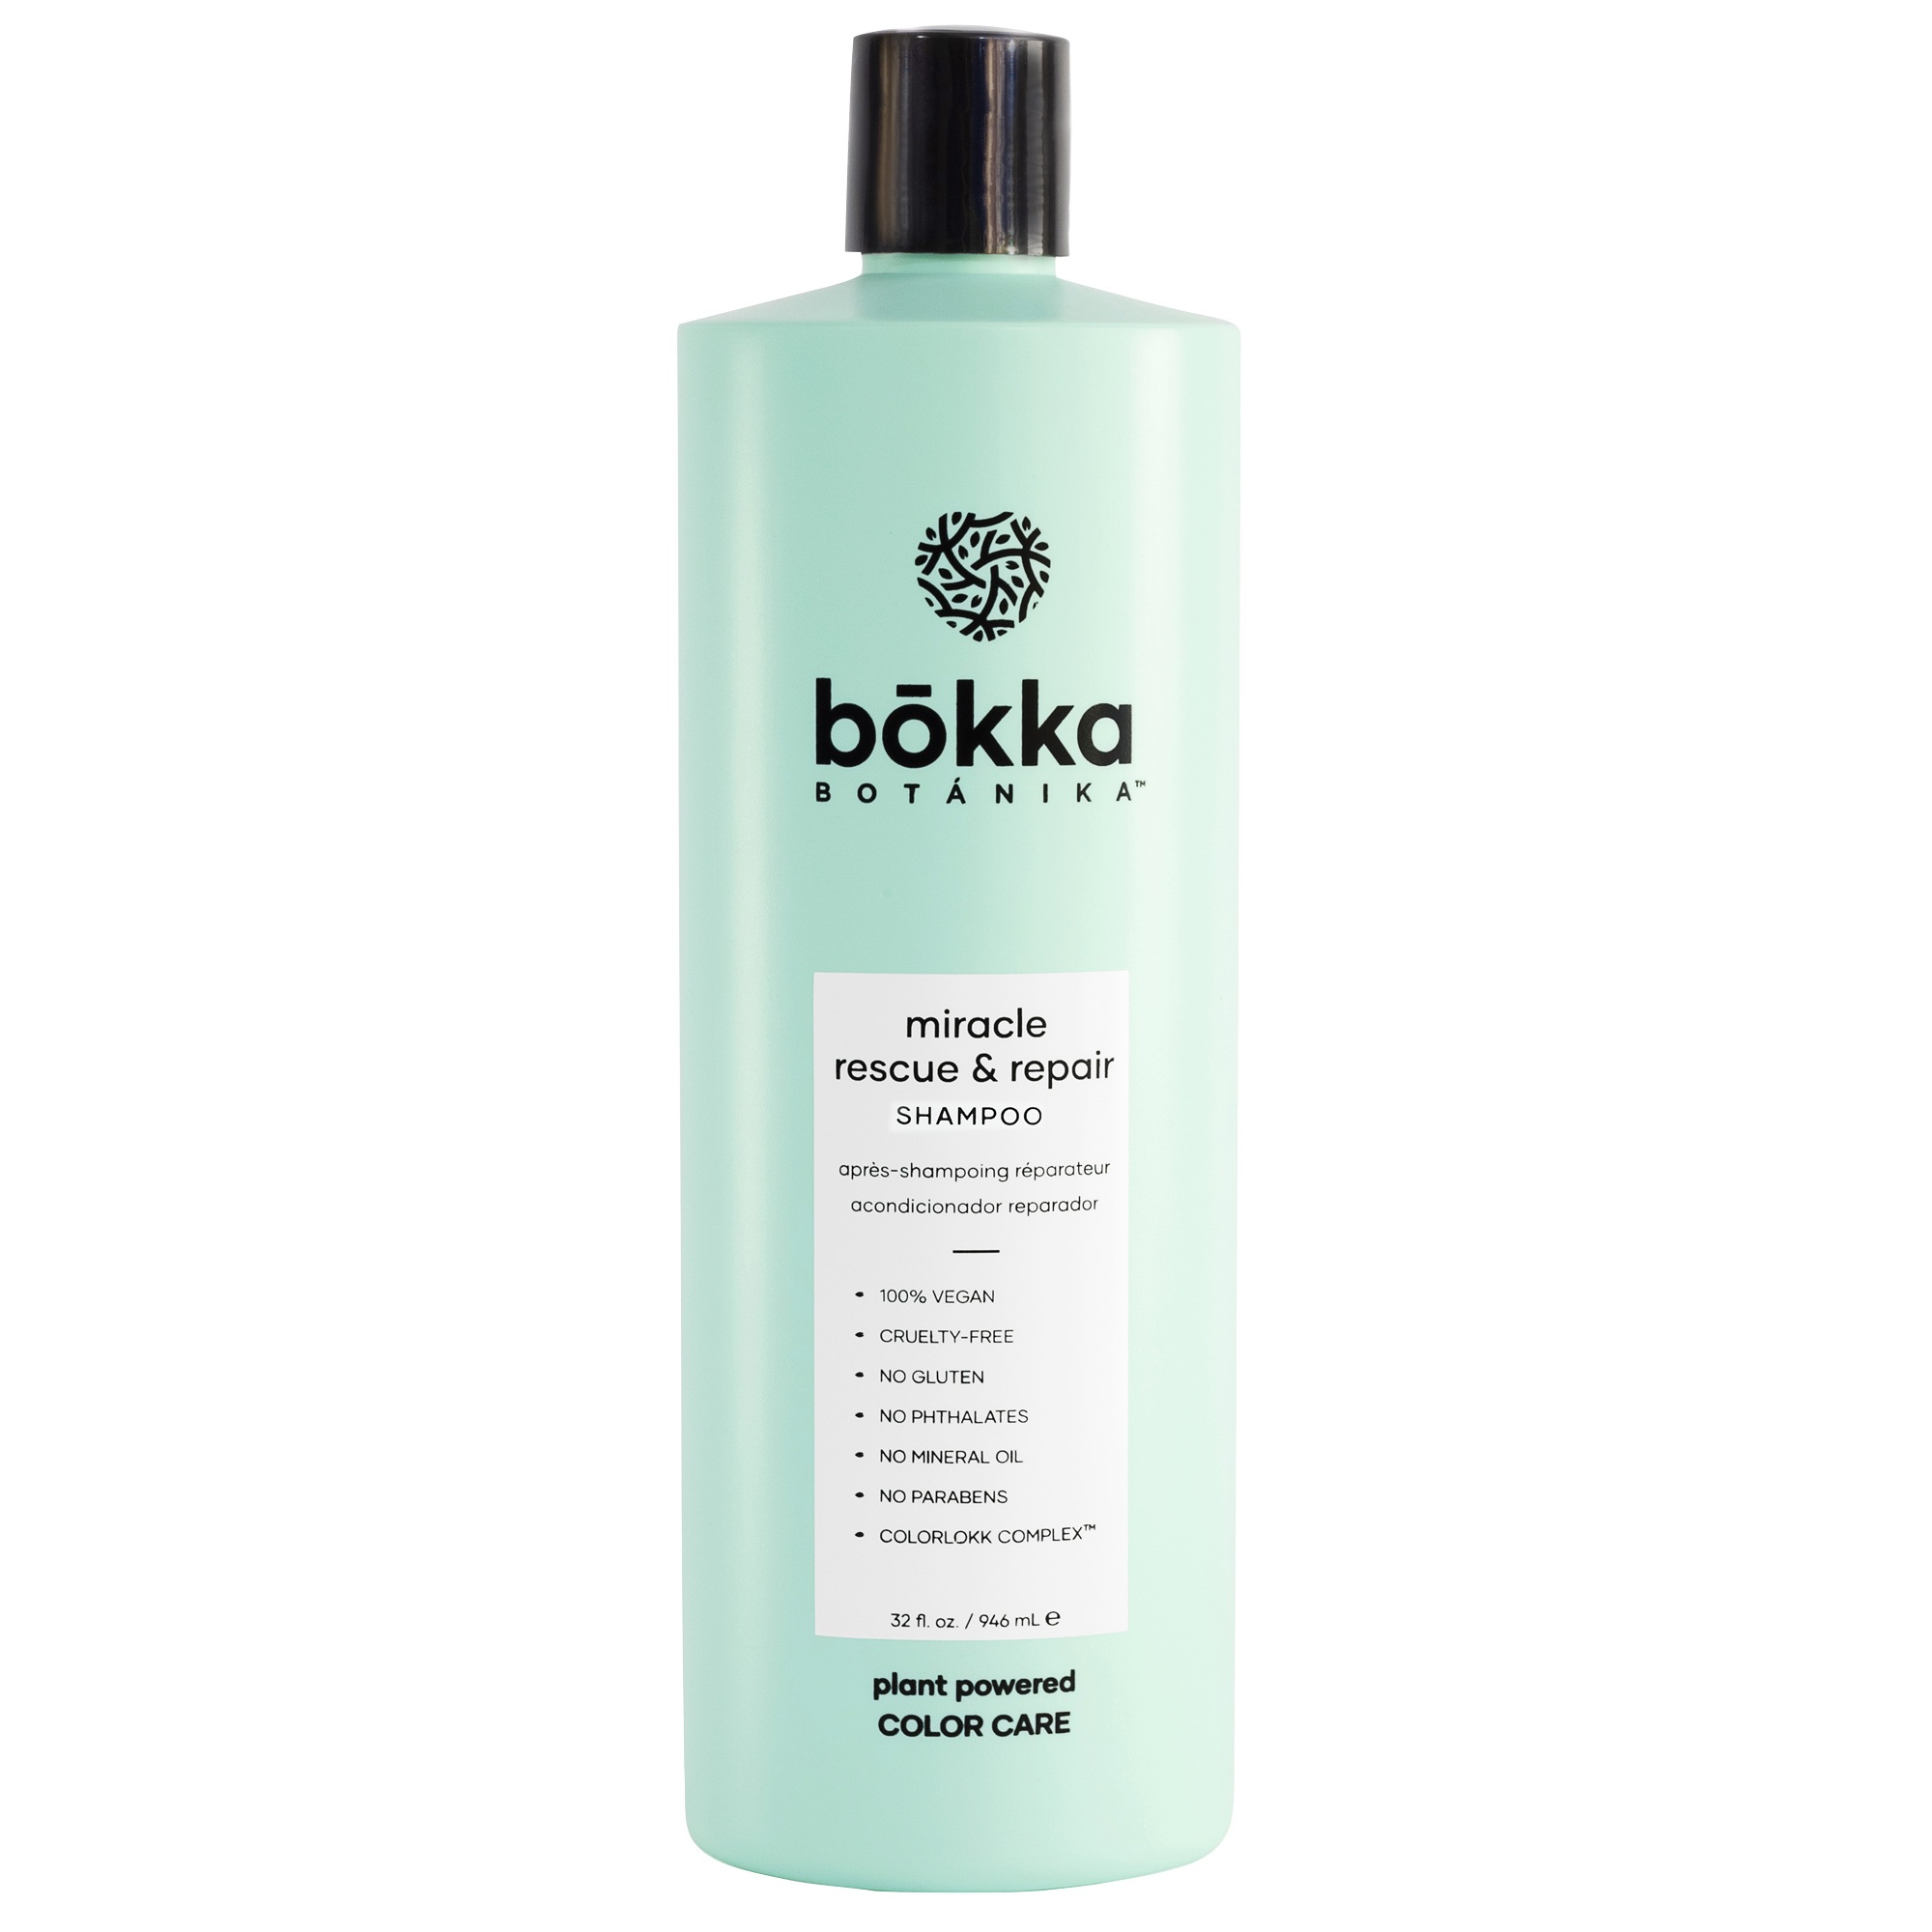 bokka BOTANICA Miracle Rescue & Repair Shampoo 32oz